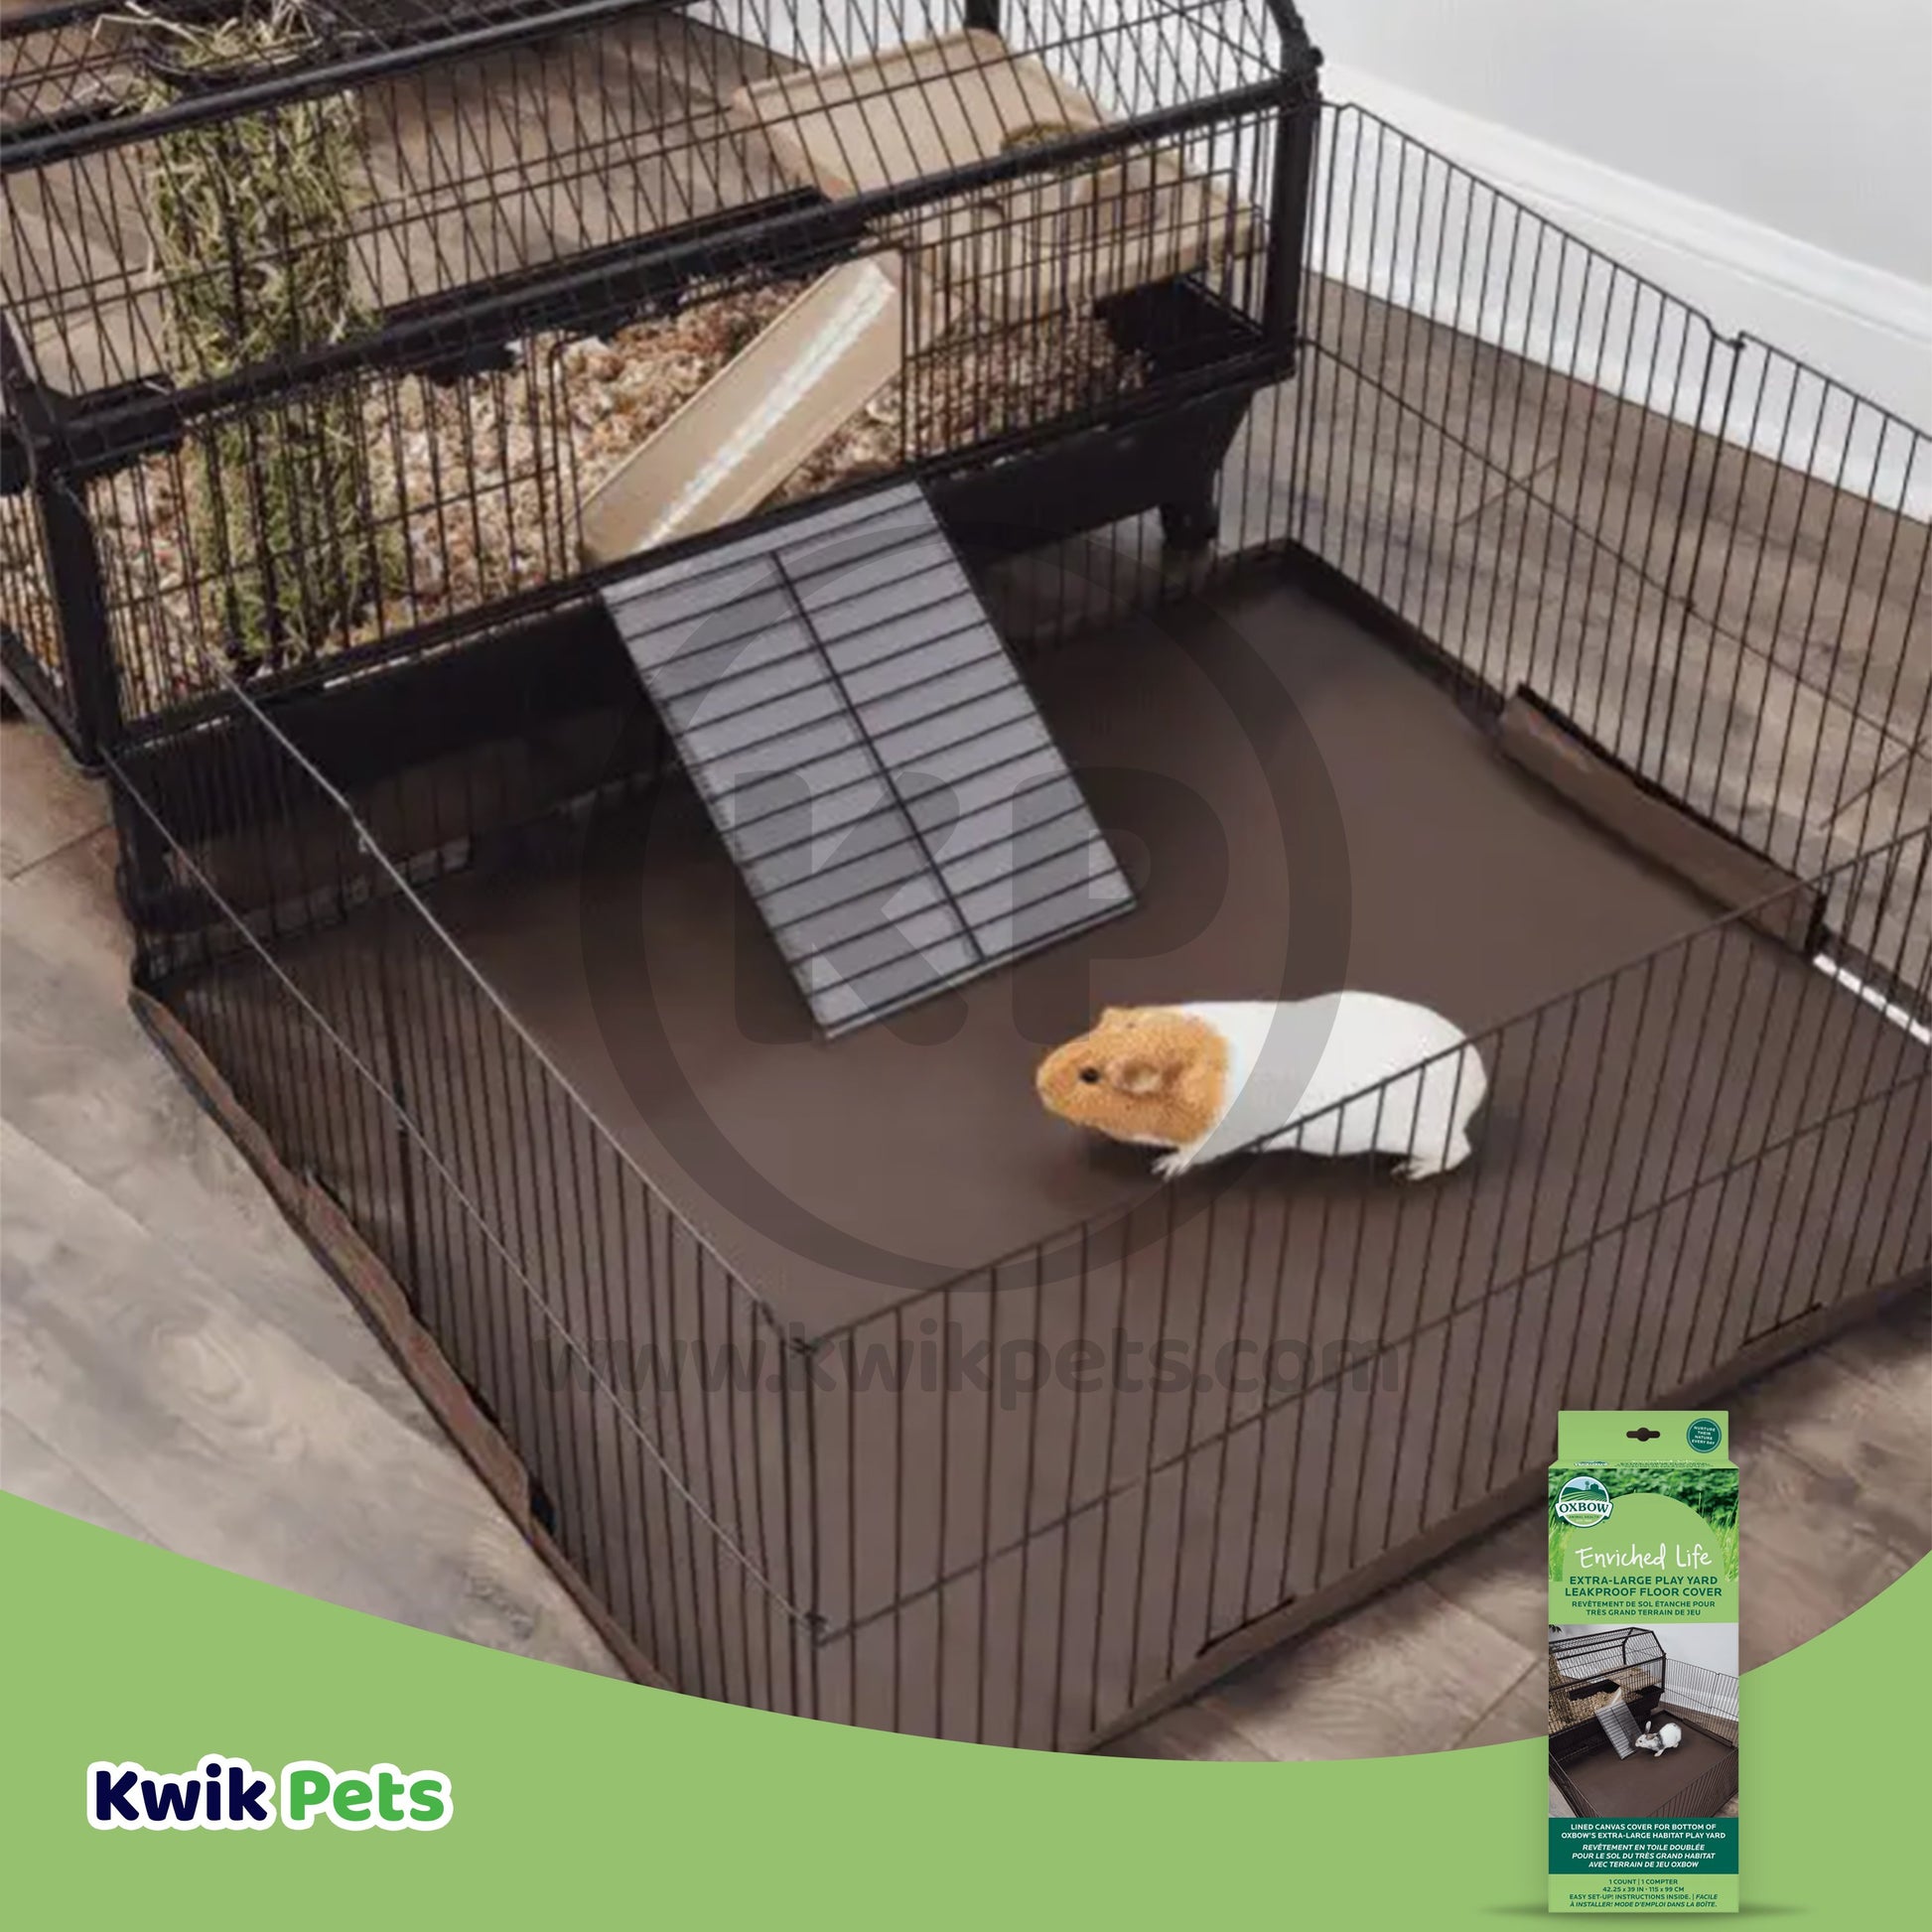 Oxbow Animal Health Enriched Life Leakproof Play Yard Floor Cover, XL - Kwik Pets